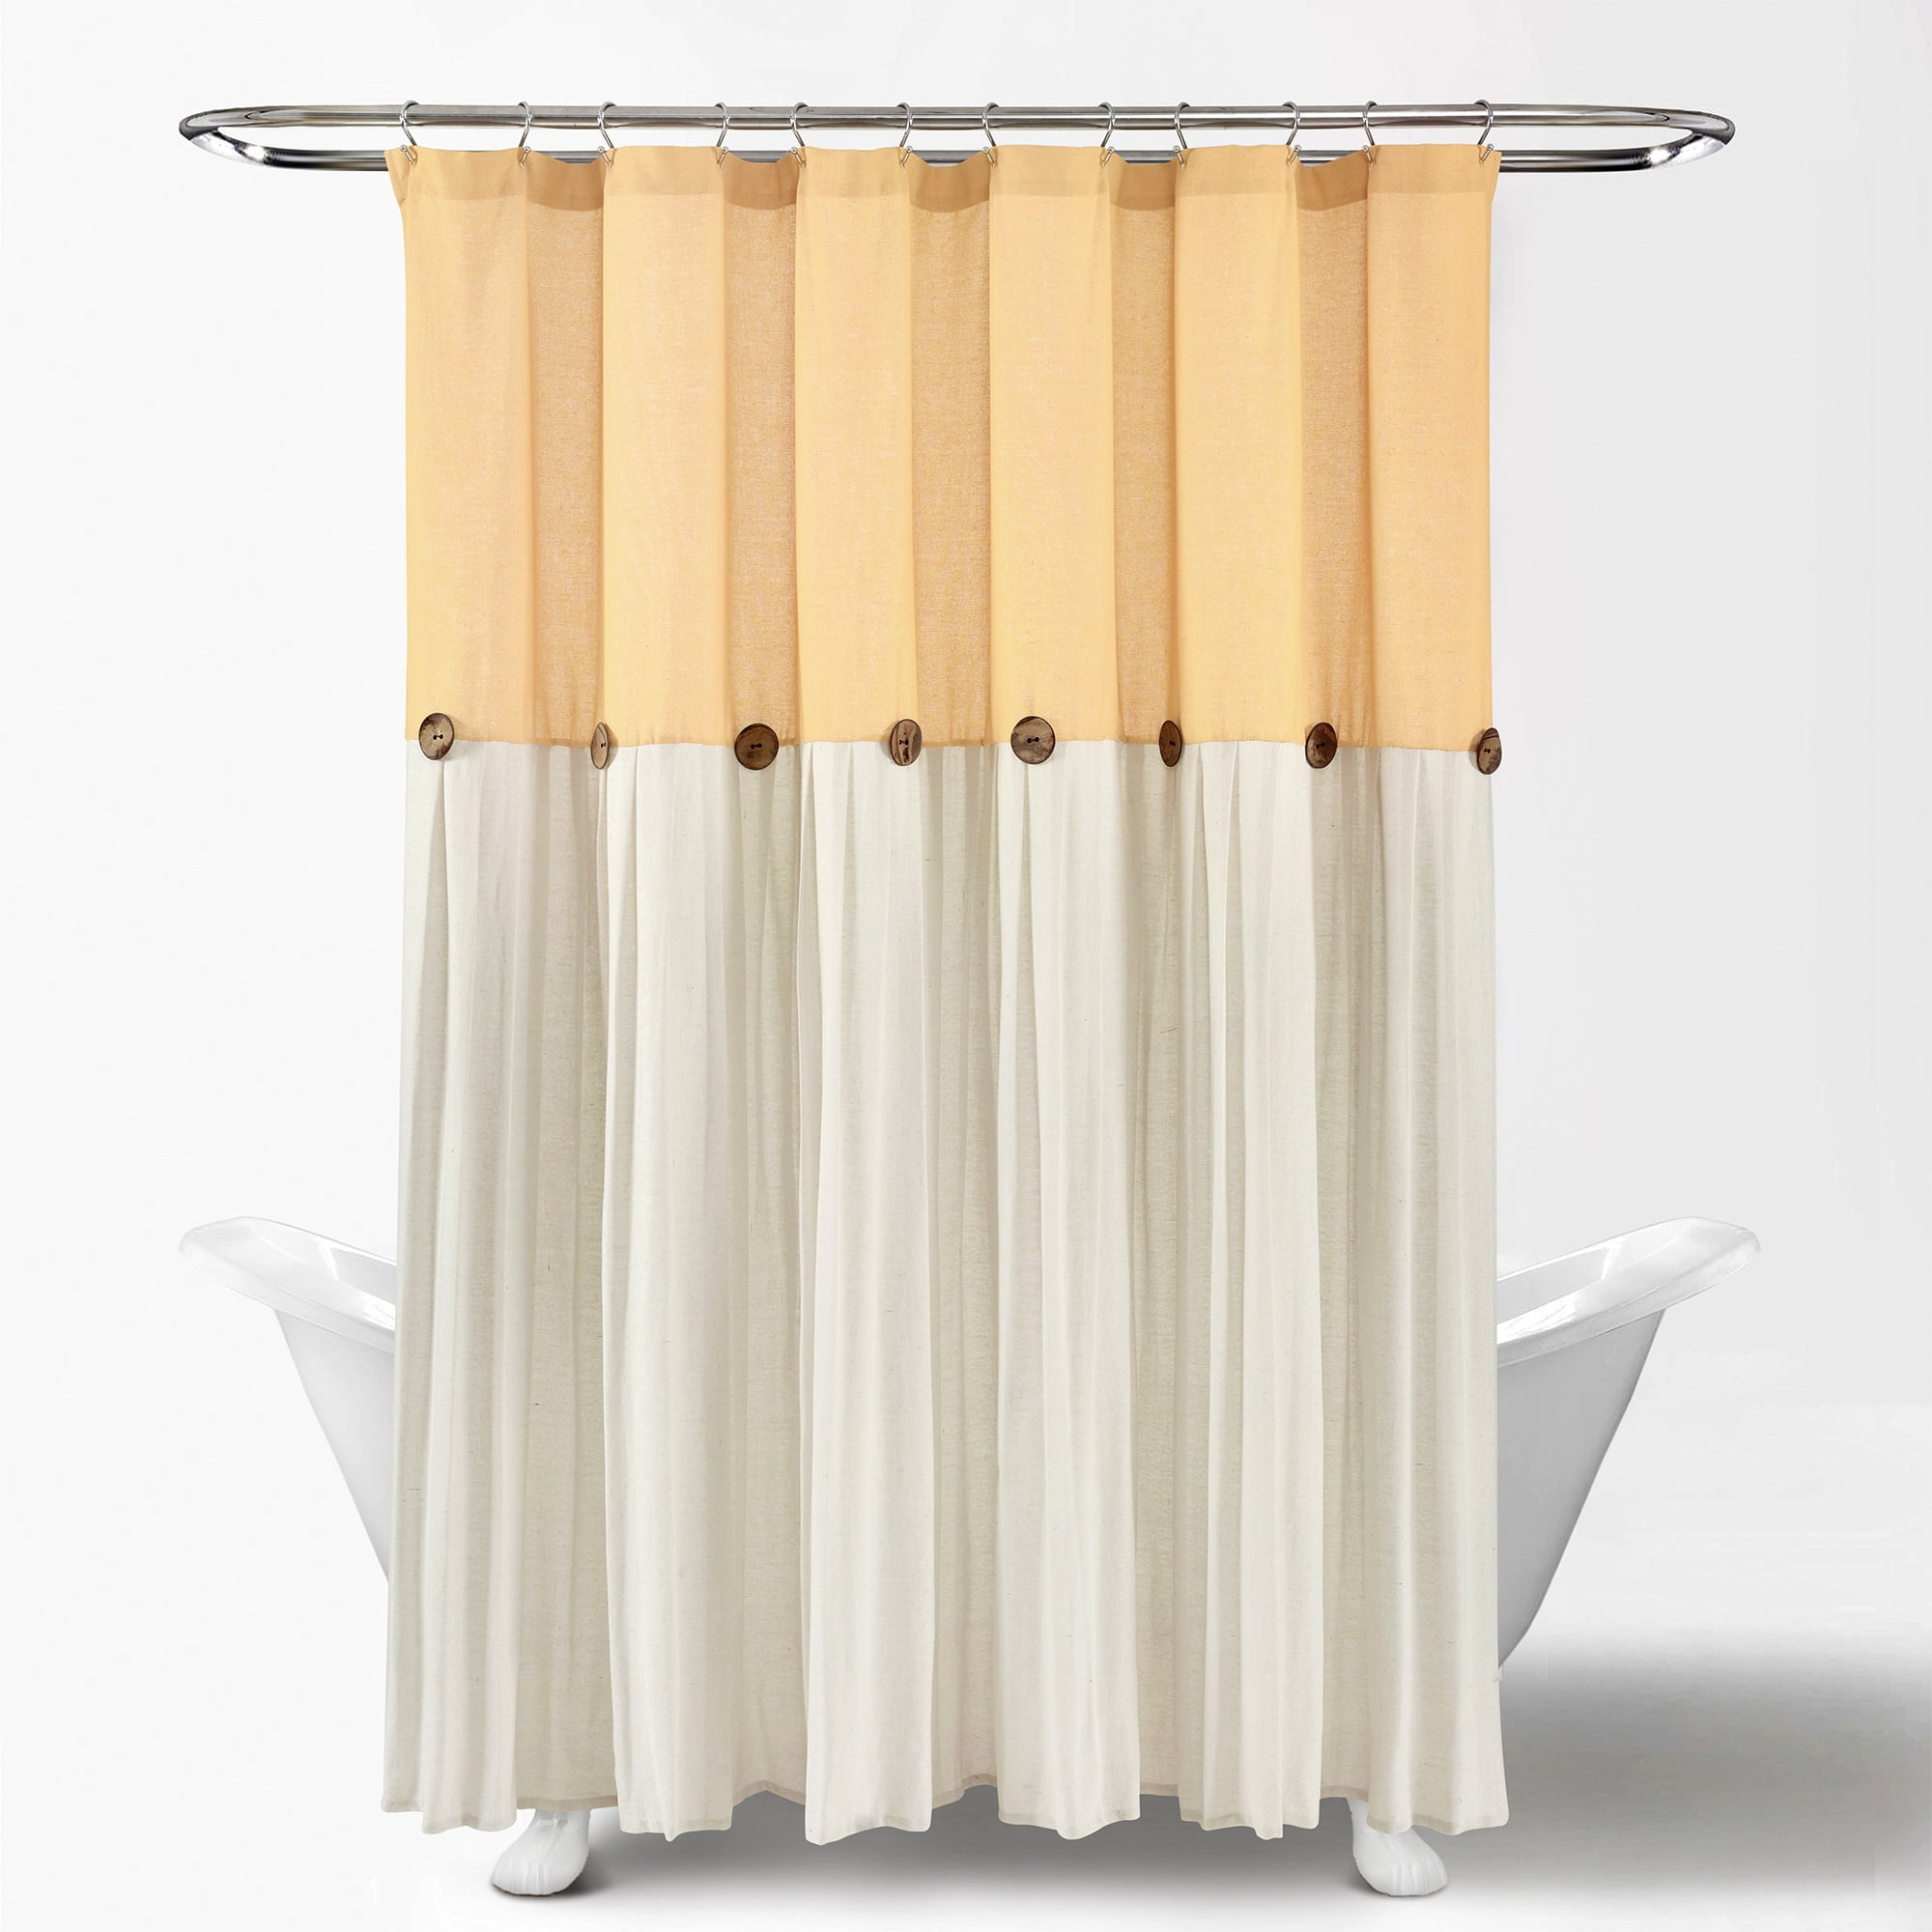 show original title Details about   Poseca print shower curtain 3d polyester design mold resistant 72 × 72 